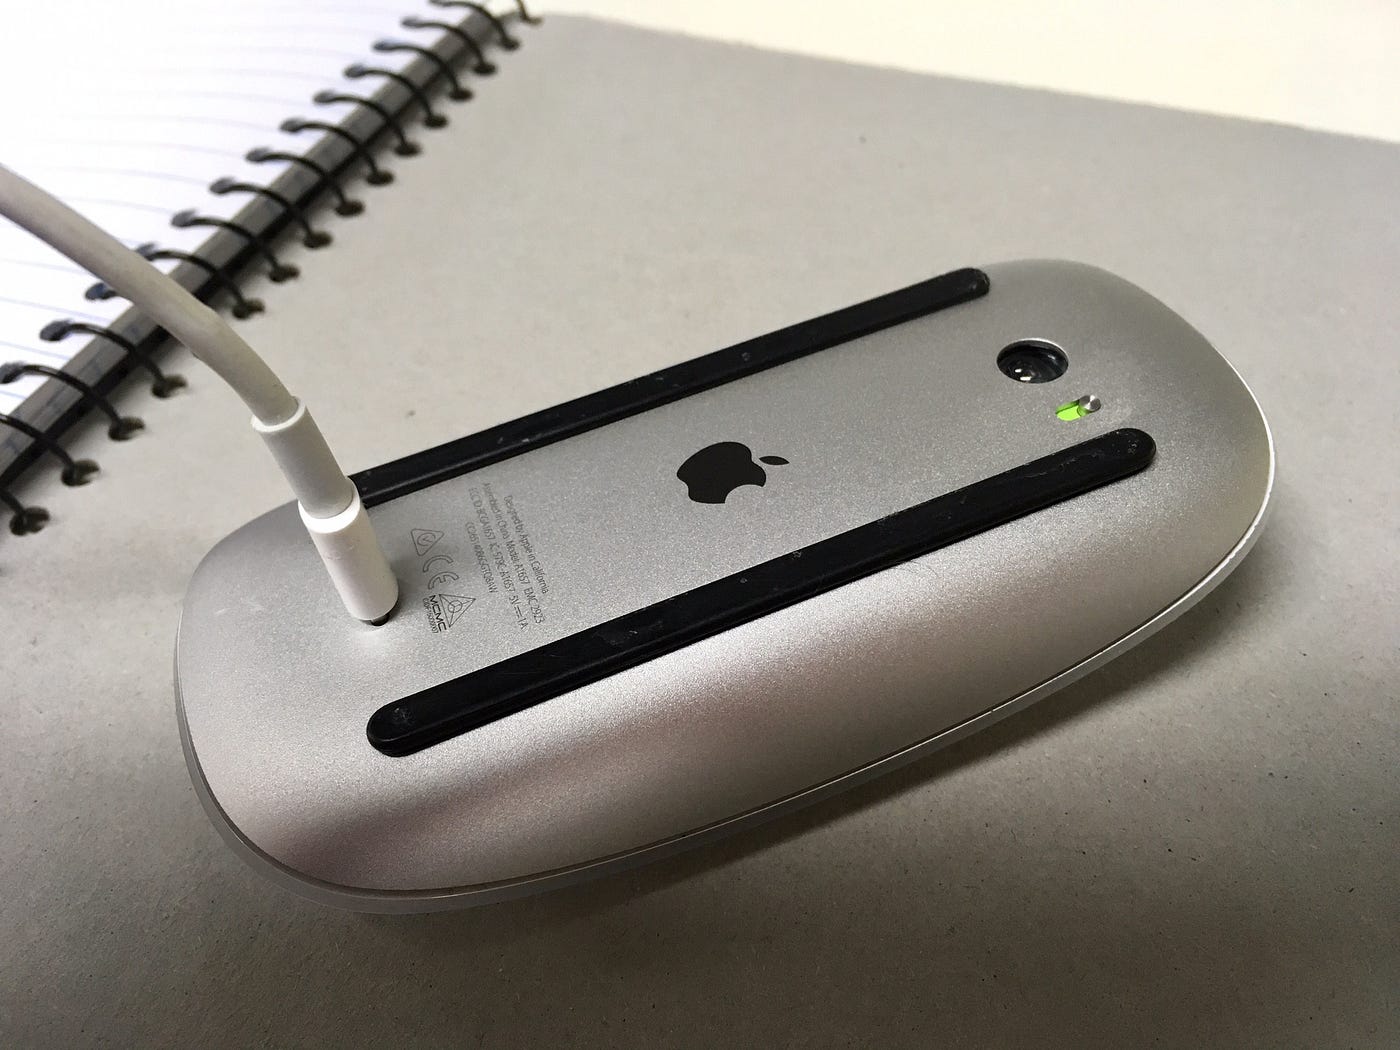 Apple Magic Mouse – Tech to School